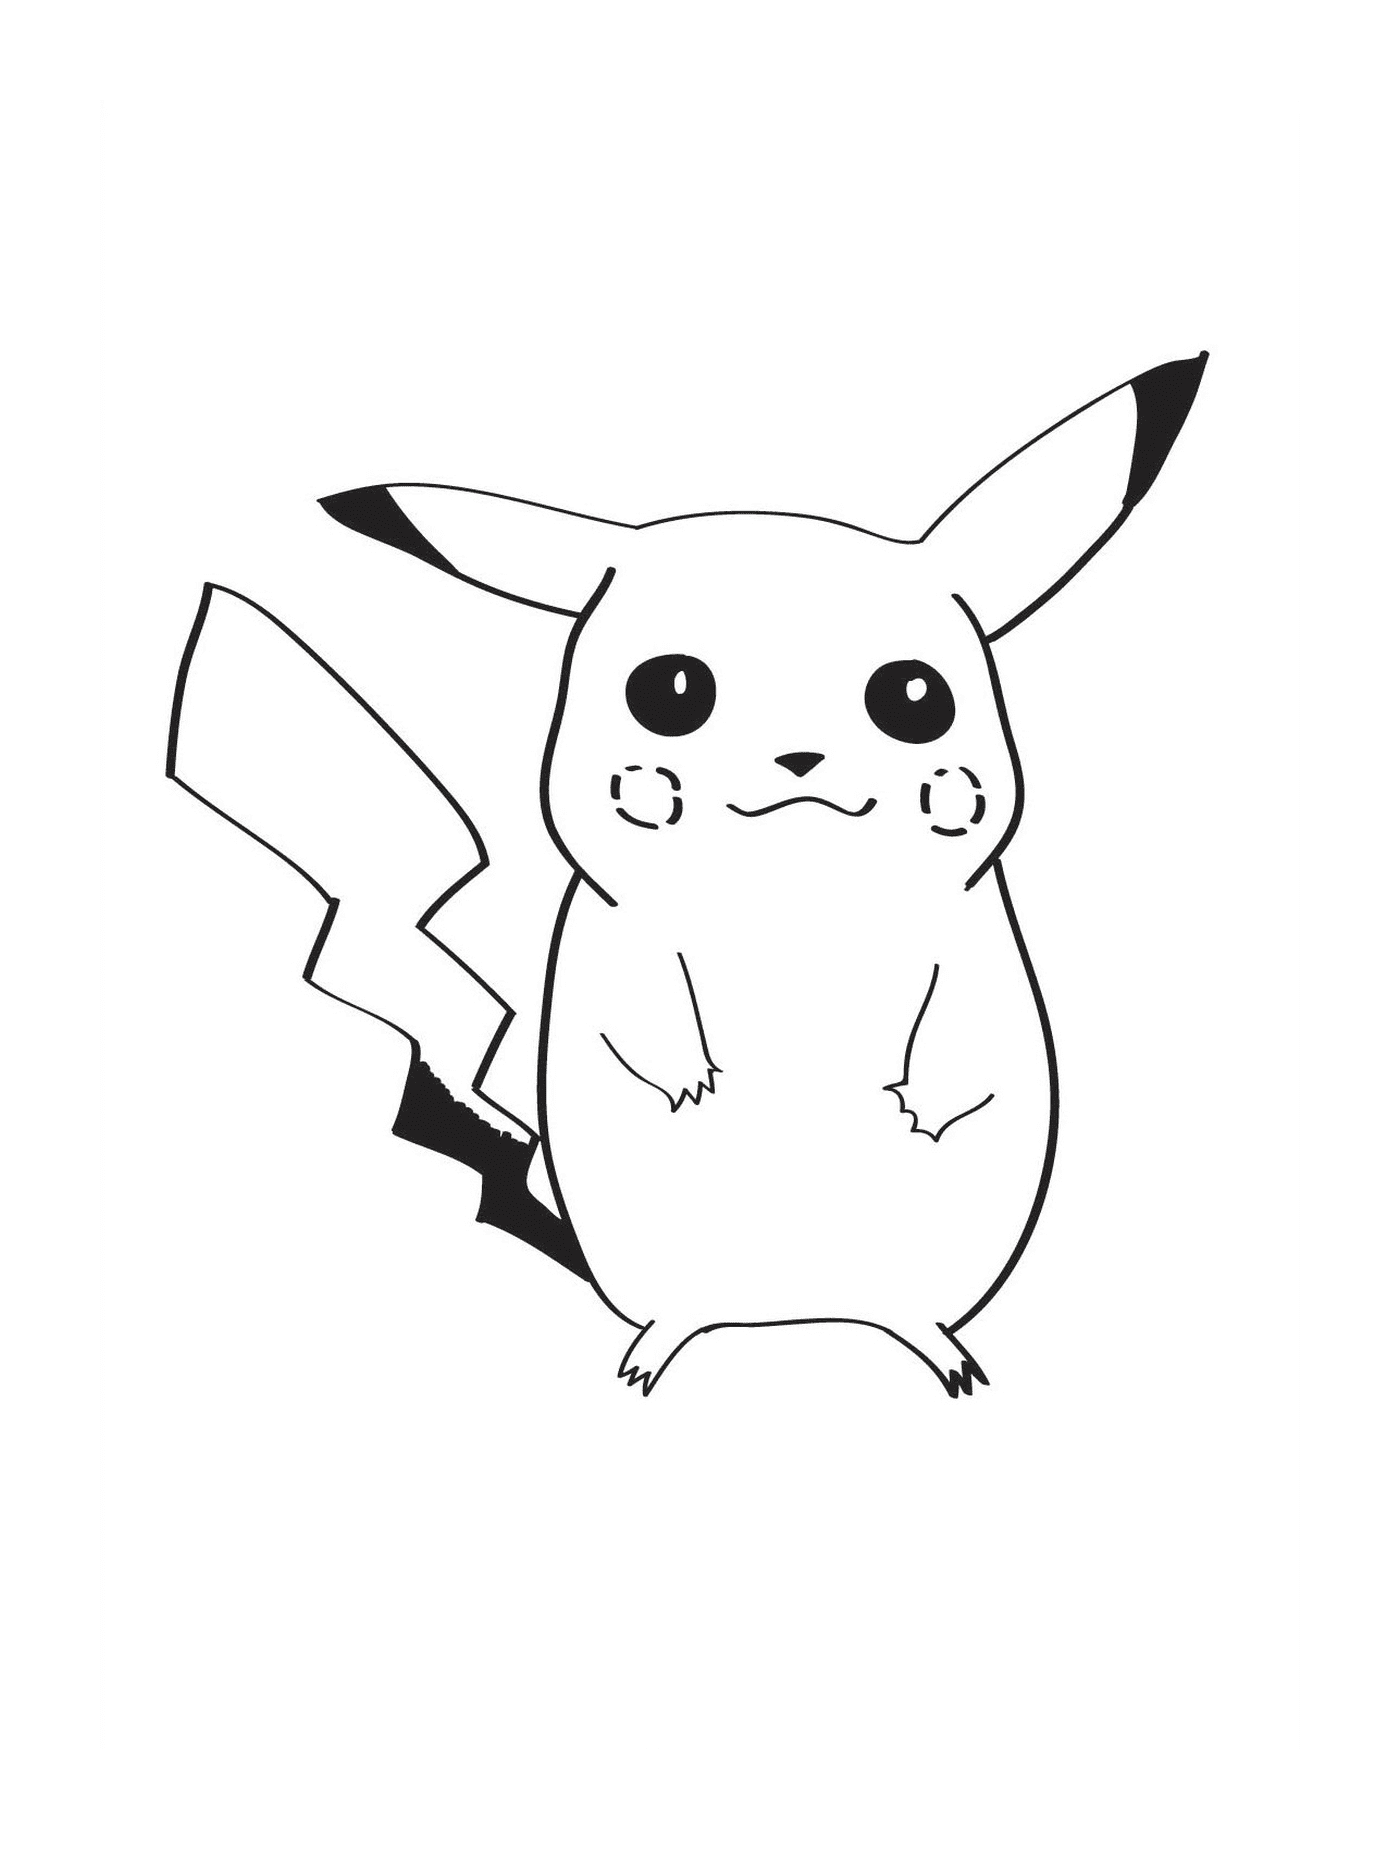  Pikachu, adorable little creature 